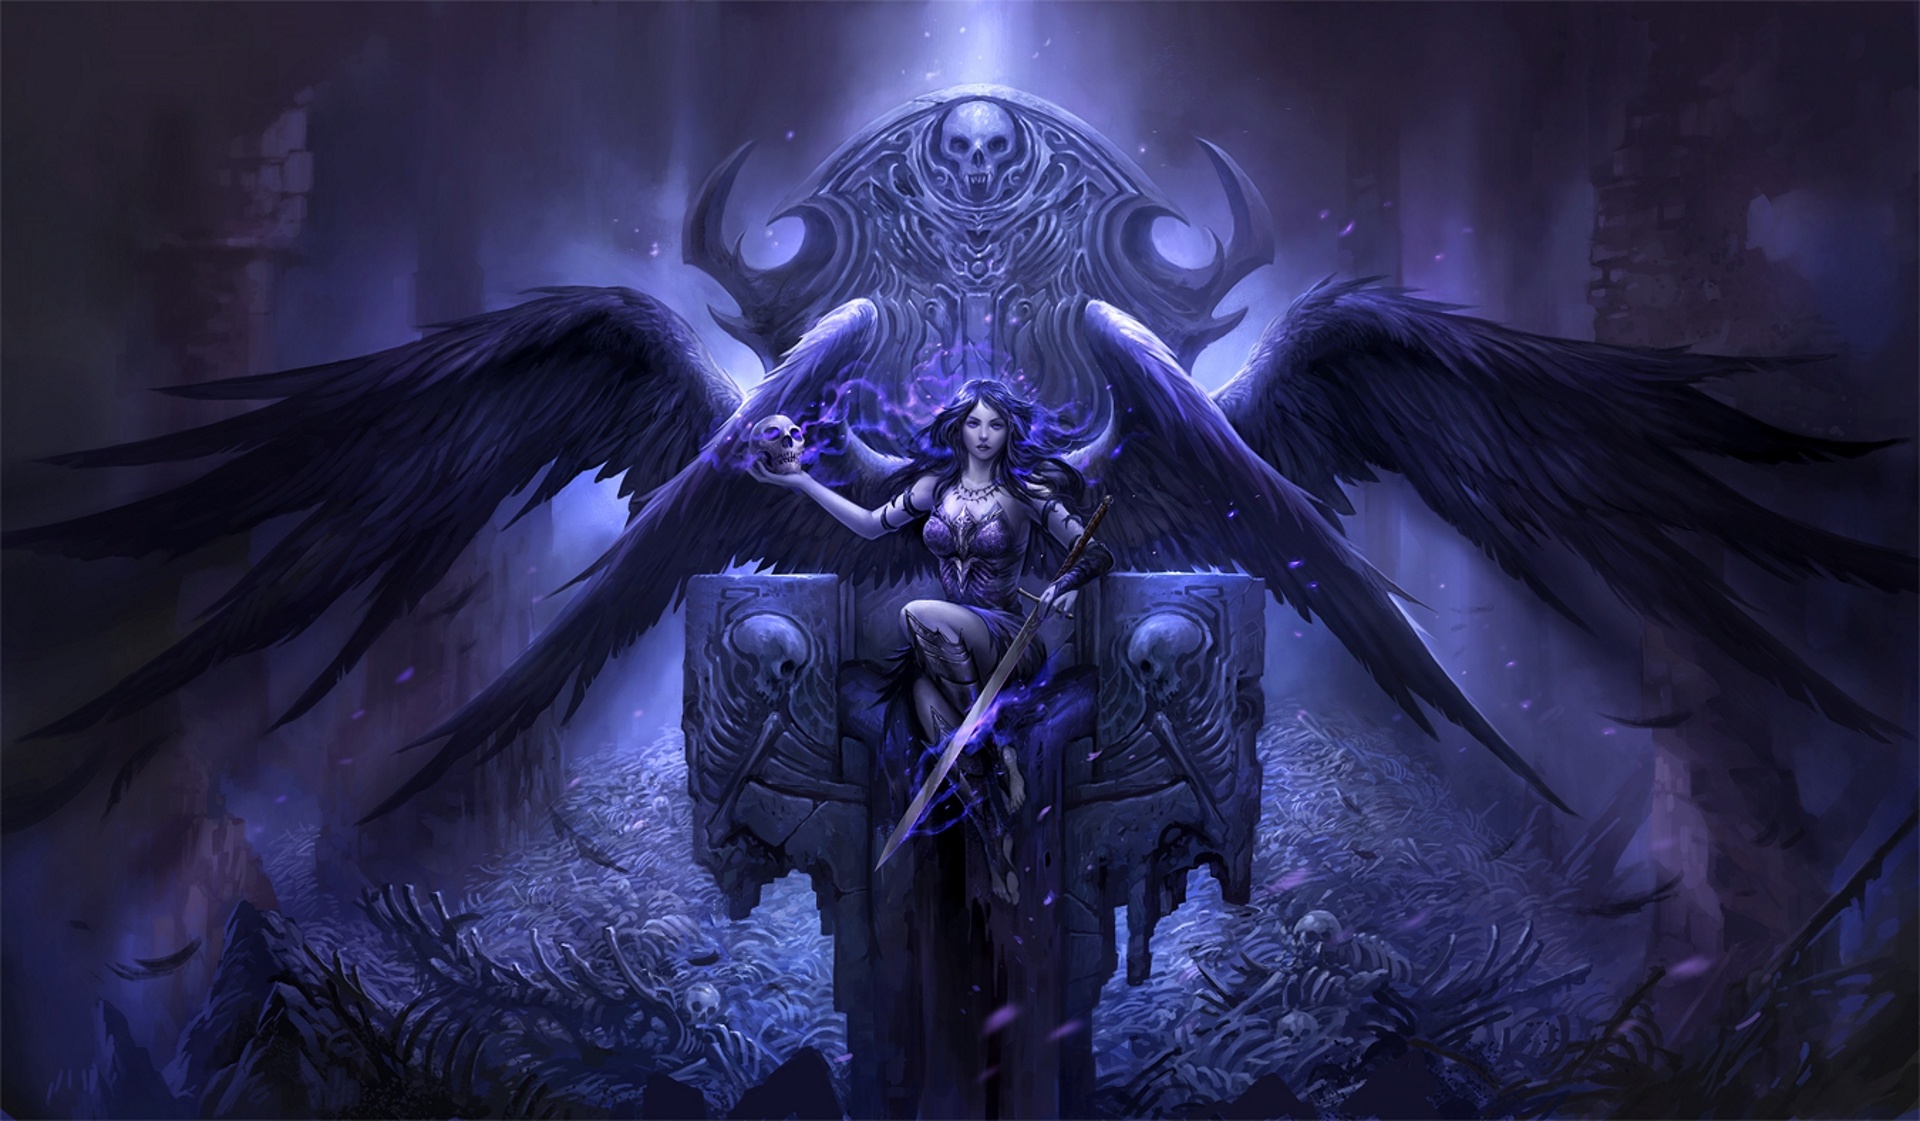 Gothic Angel Warrior Sitting on Throne by sandara